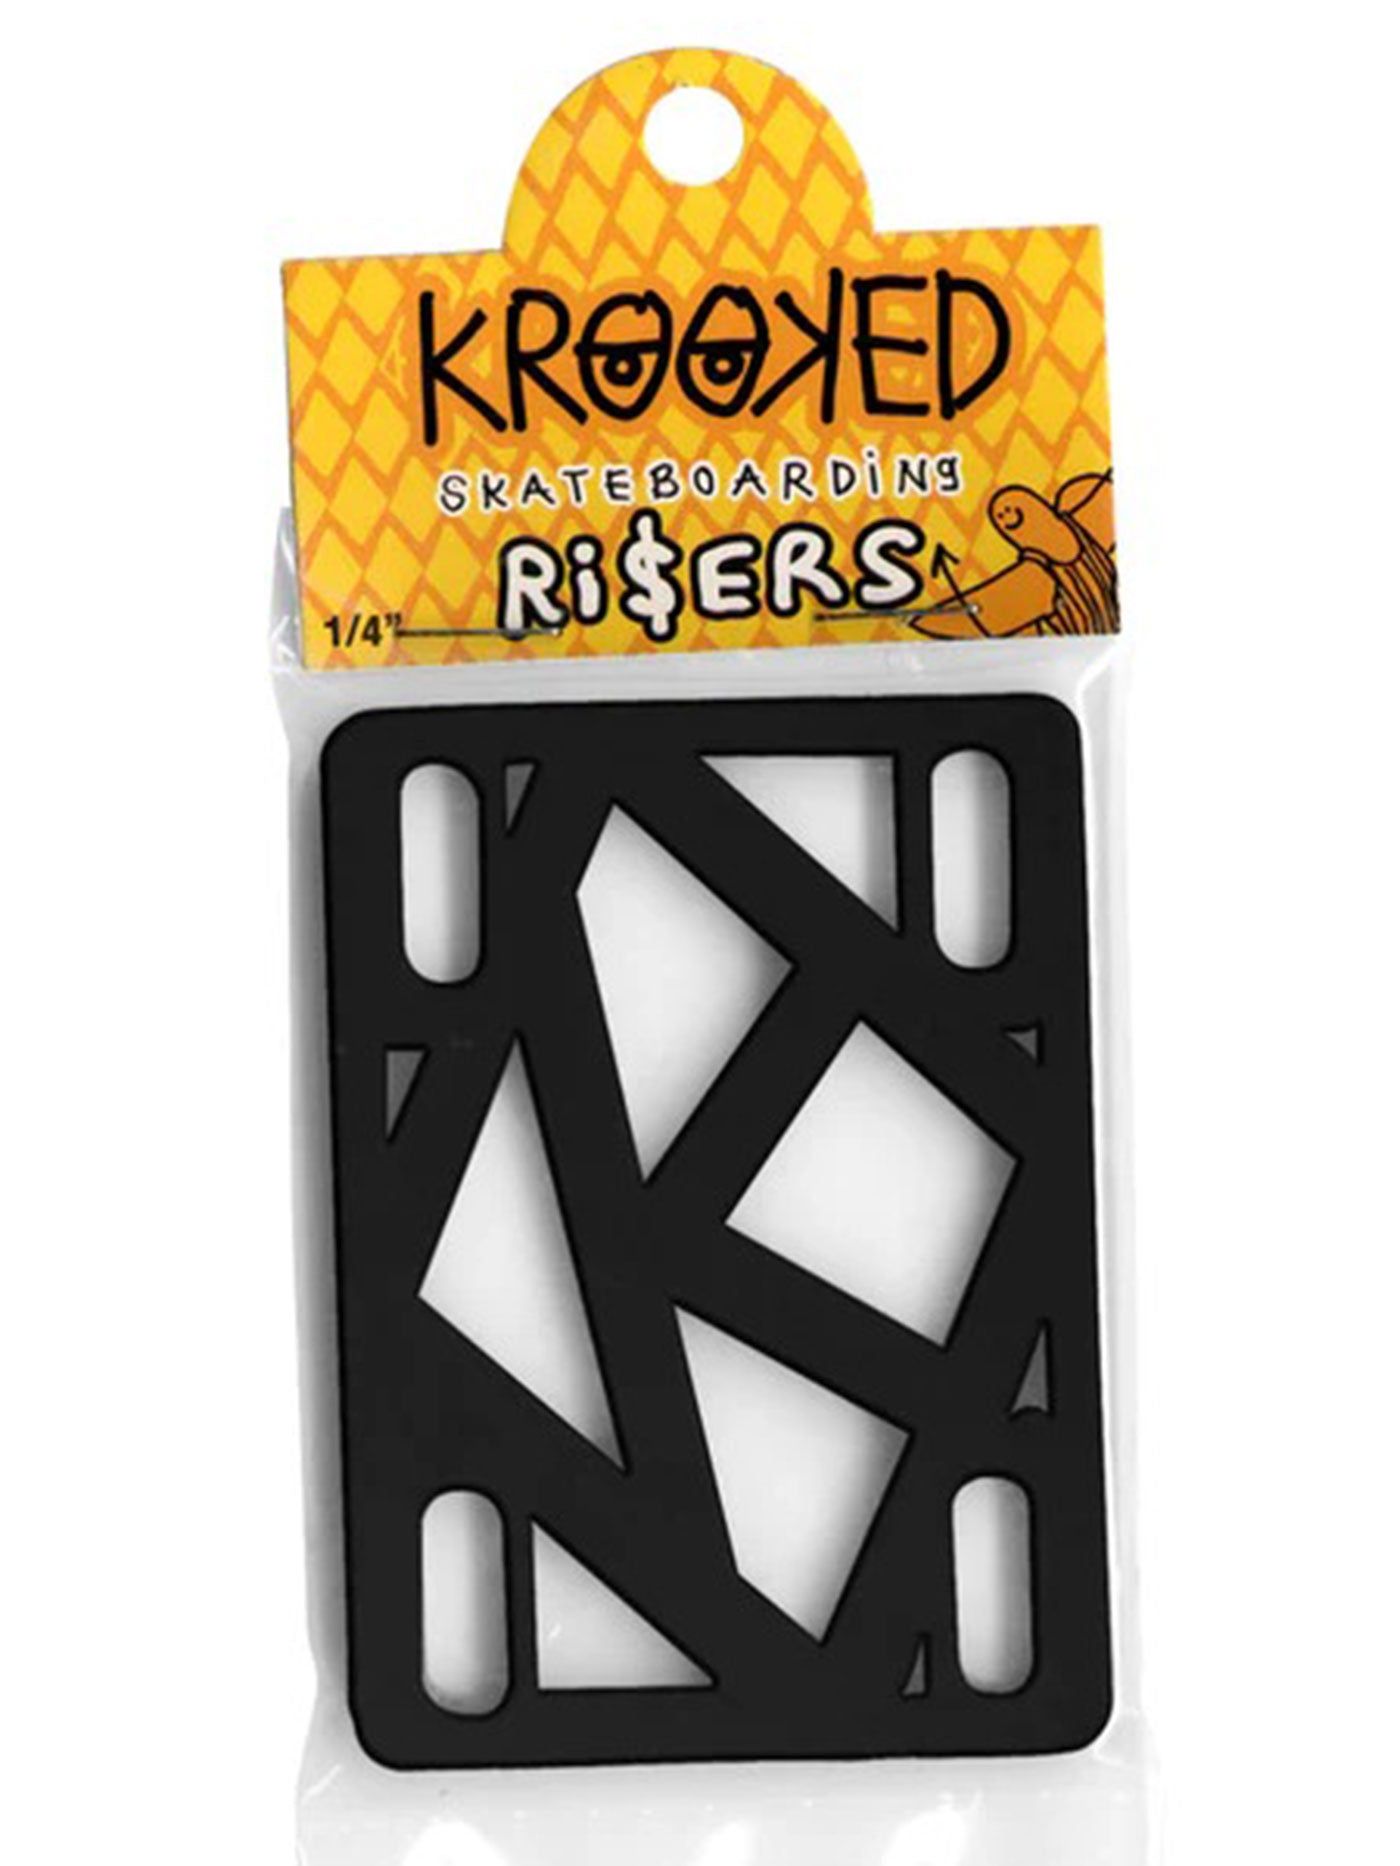 Krooked Skateboard Risers